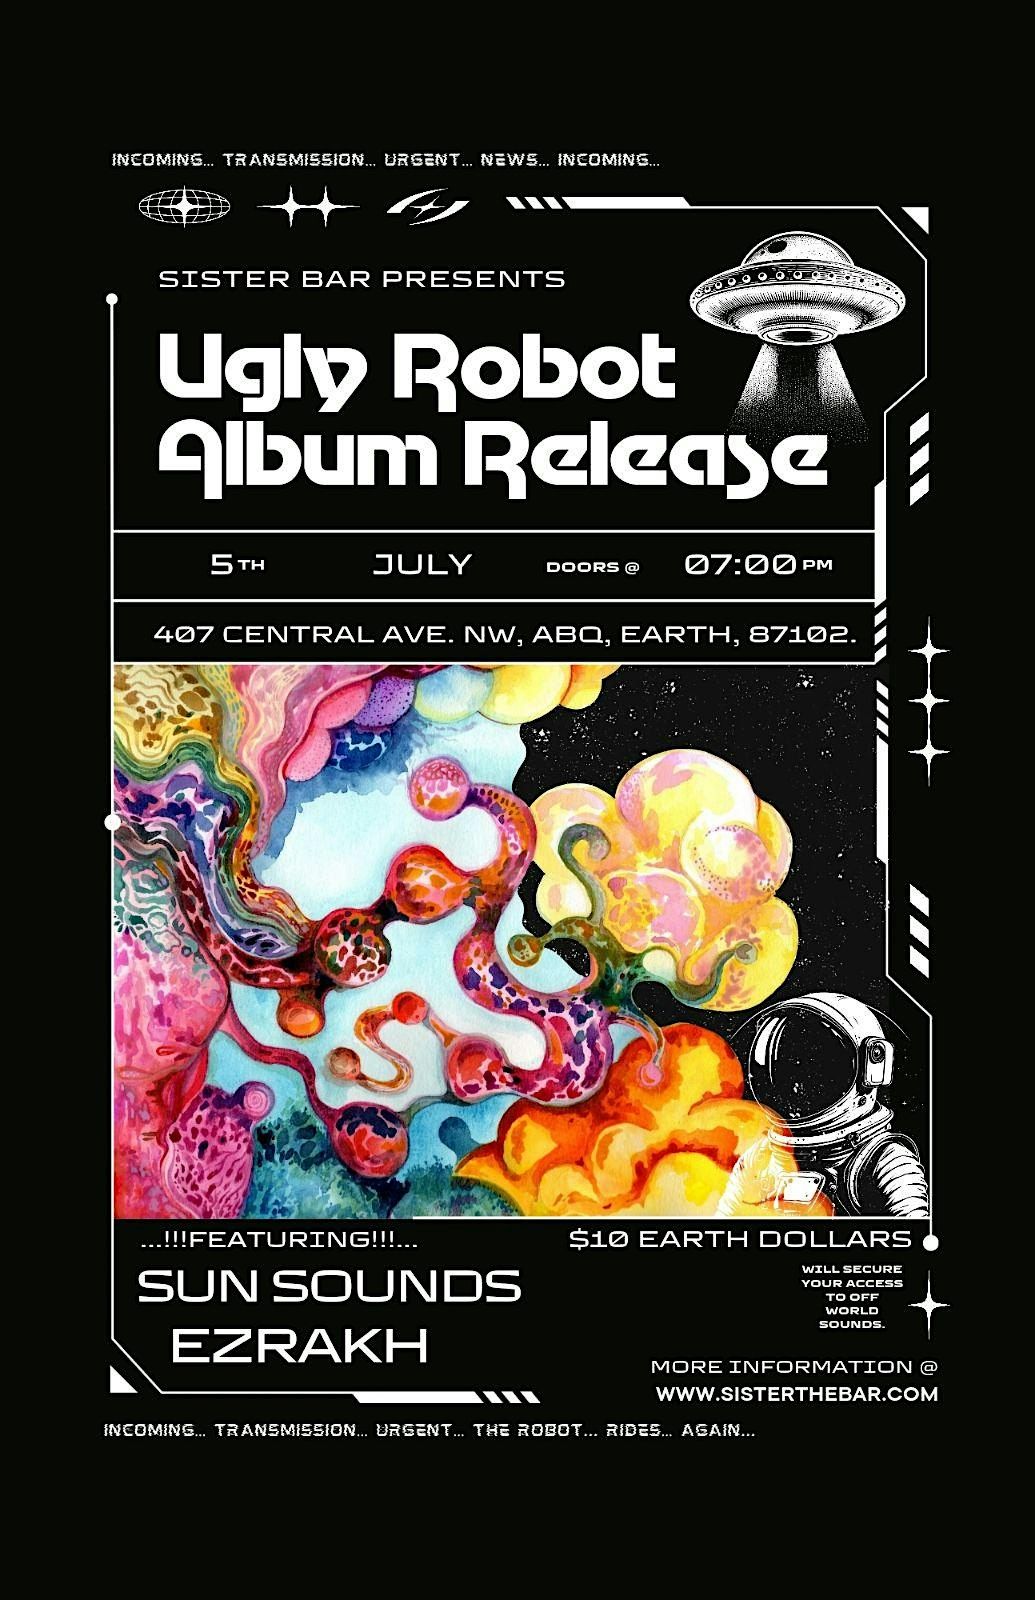 Ugly Robot, EZRAKH, Sun Sounds